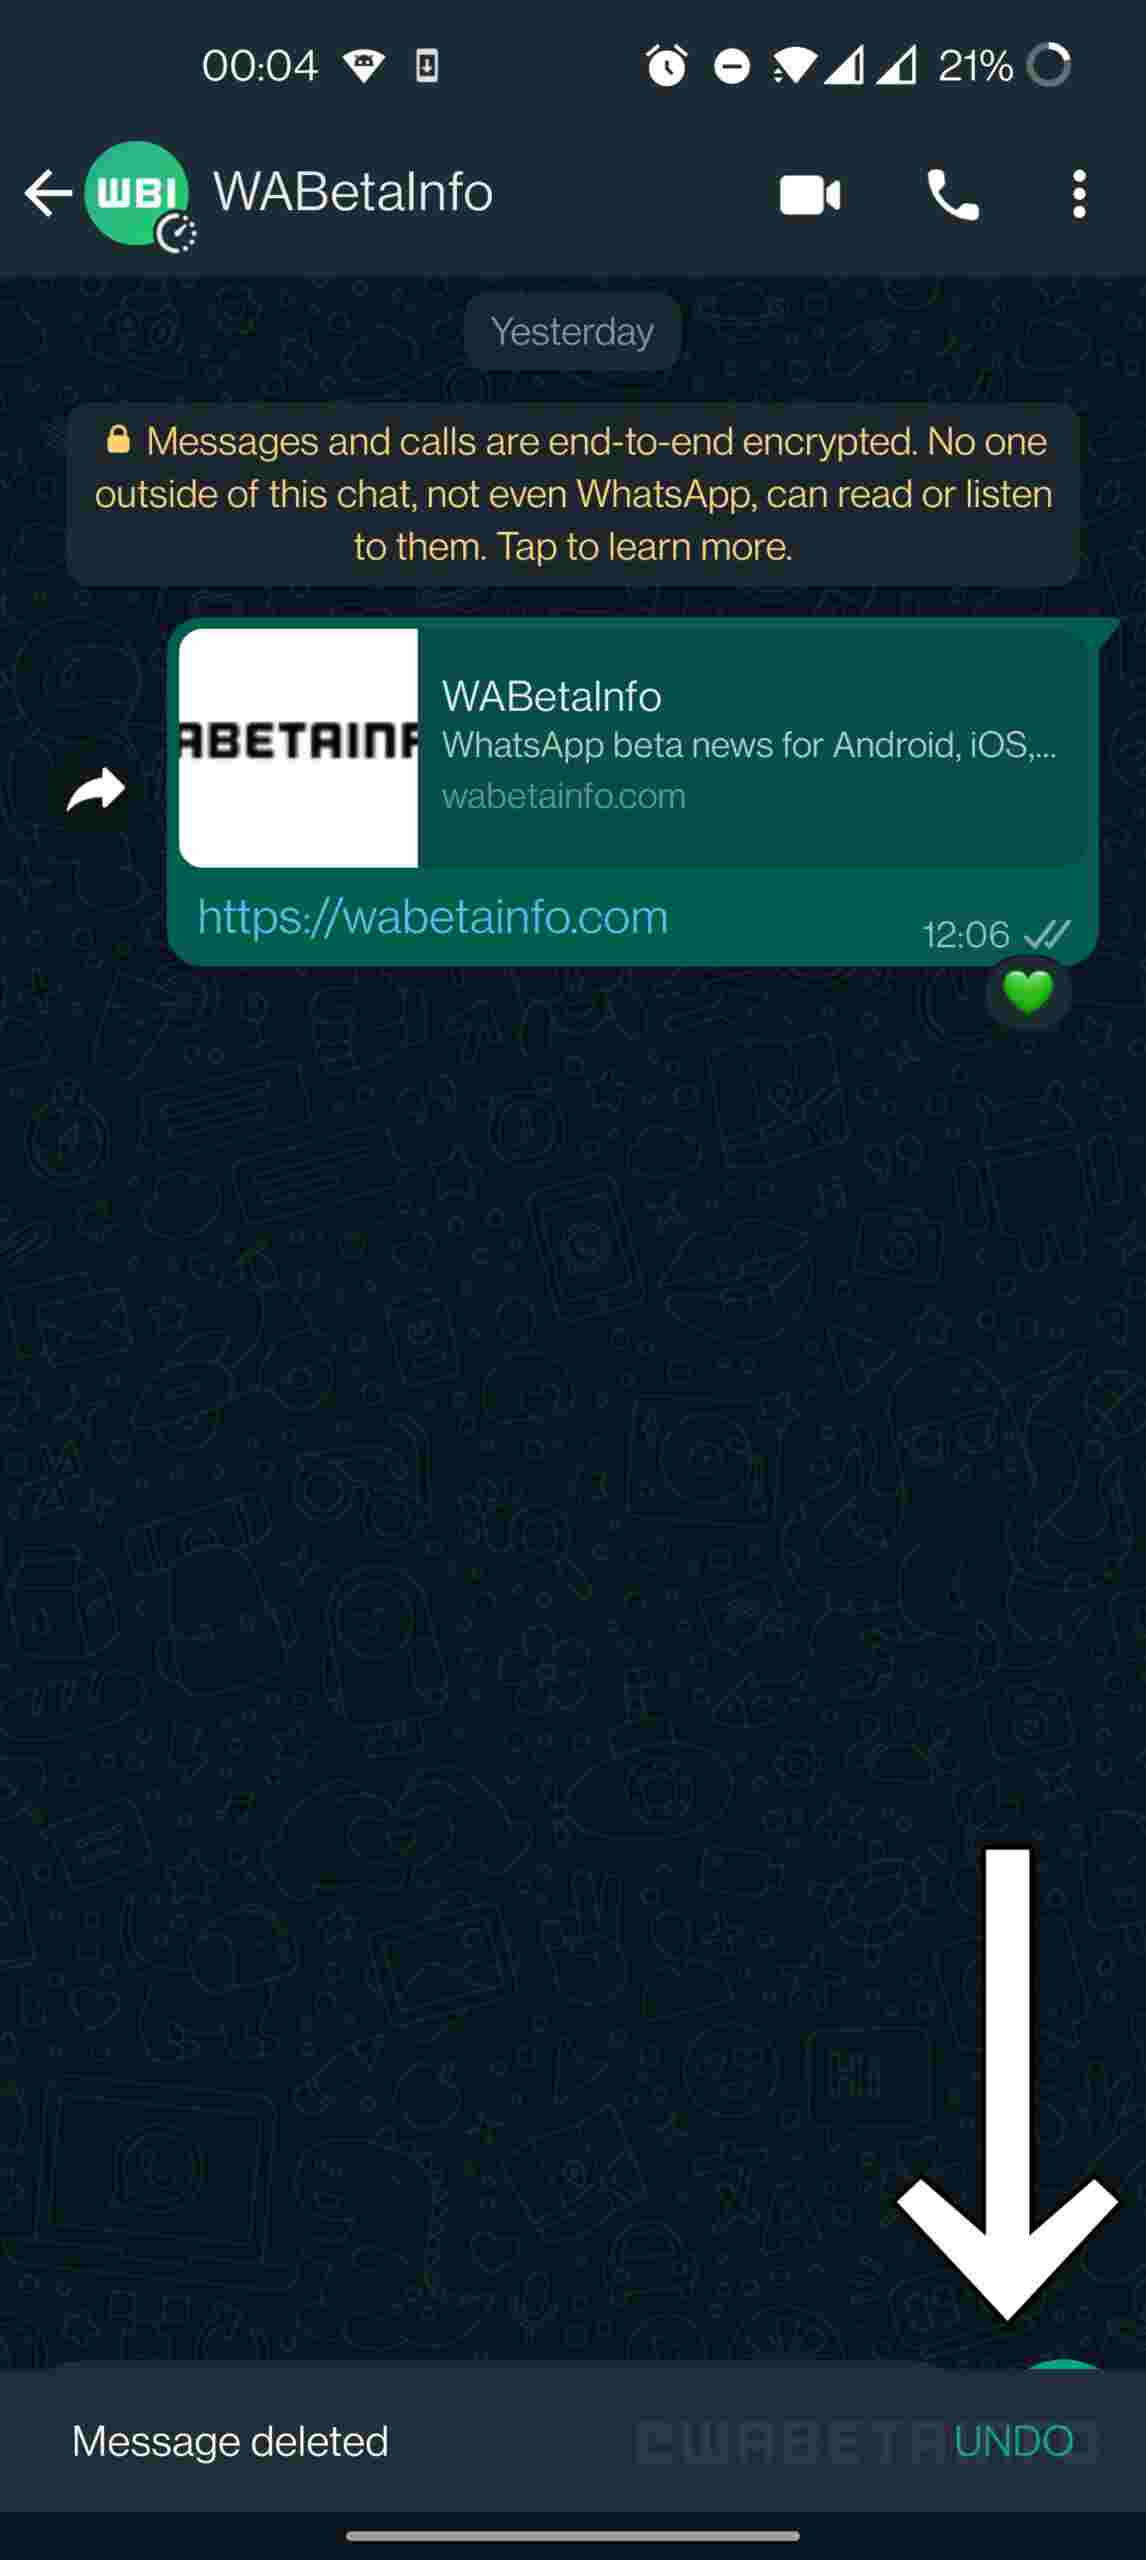 WhatsApp Undo Deleted Message, Image Credit: WABetaInfo